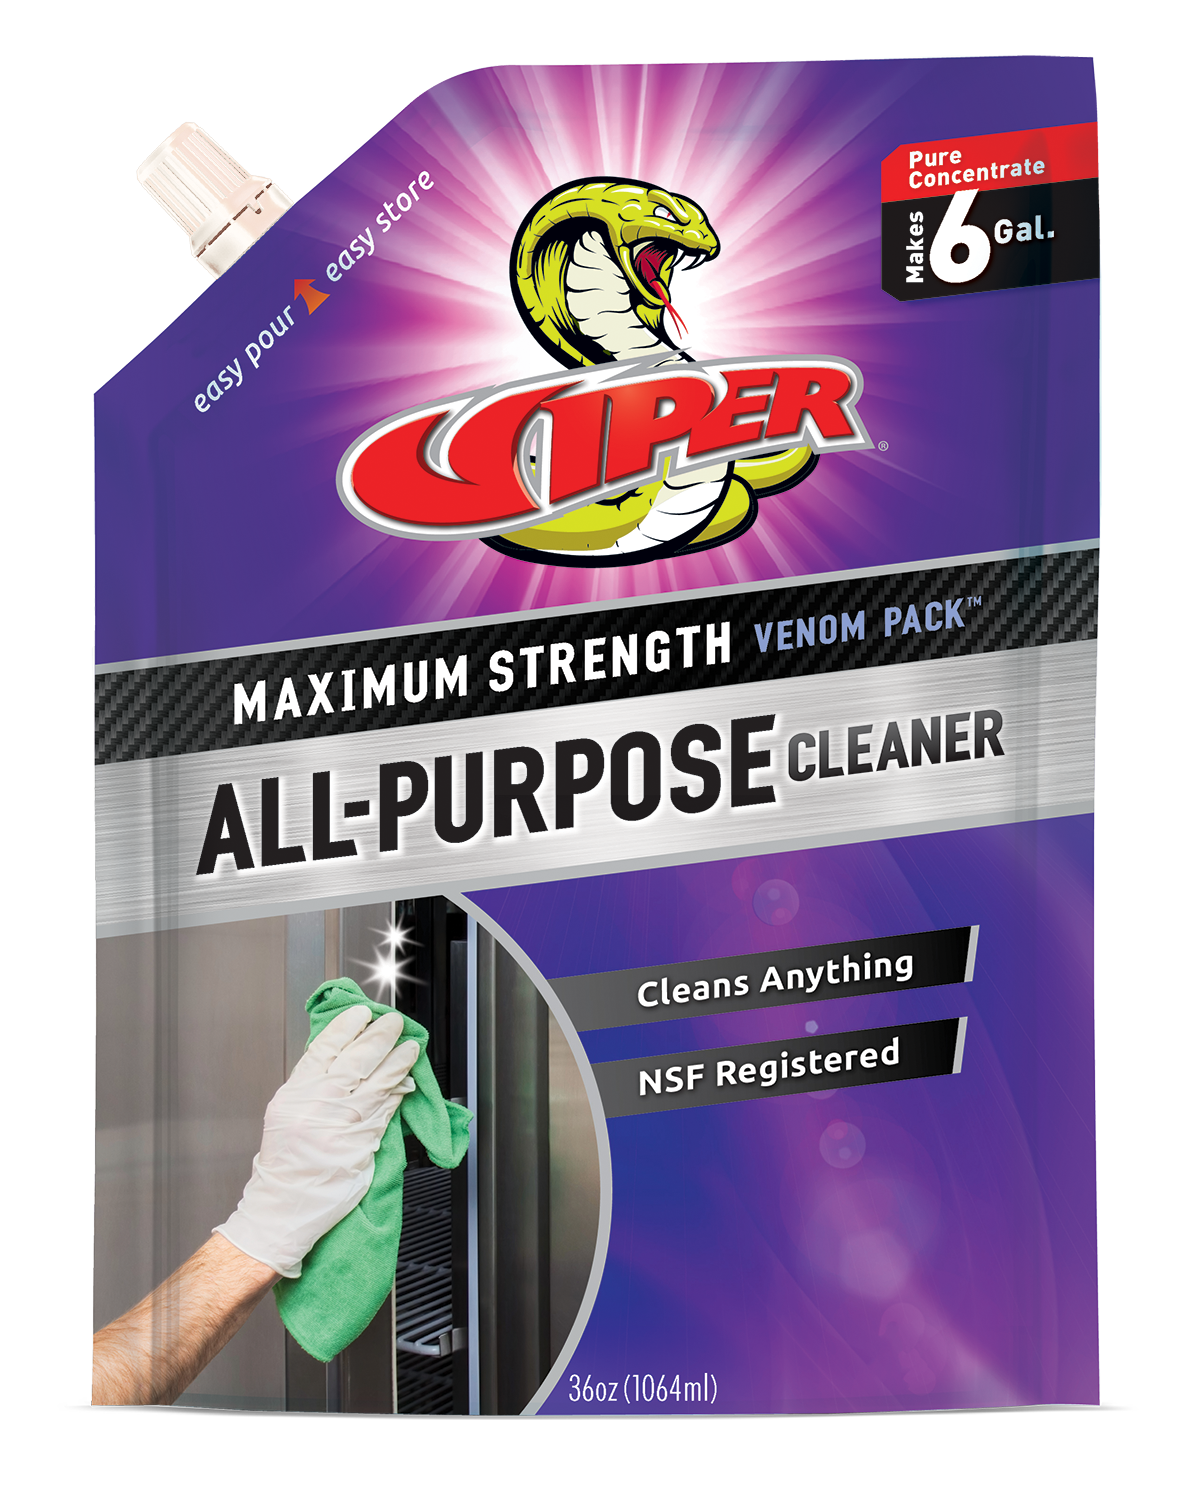 Viper Venom Pack - All-Purpose Cleaner (1064ml)